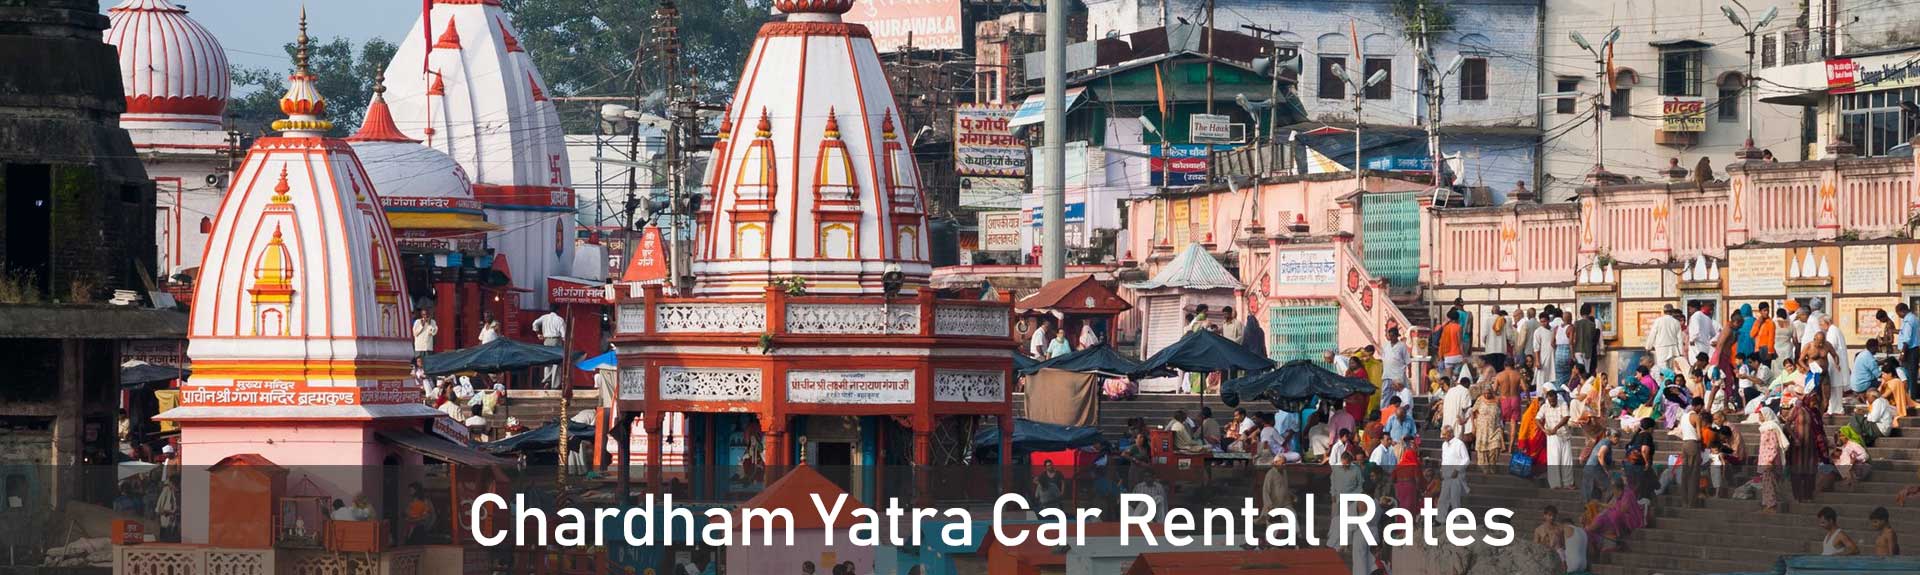 Chardham Yatra Car Rental Rates